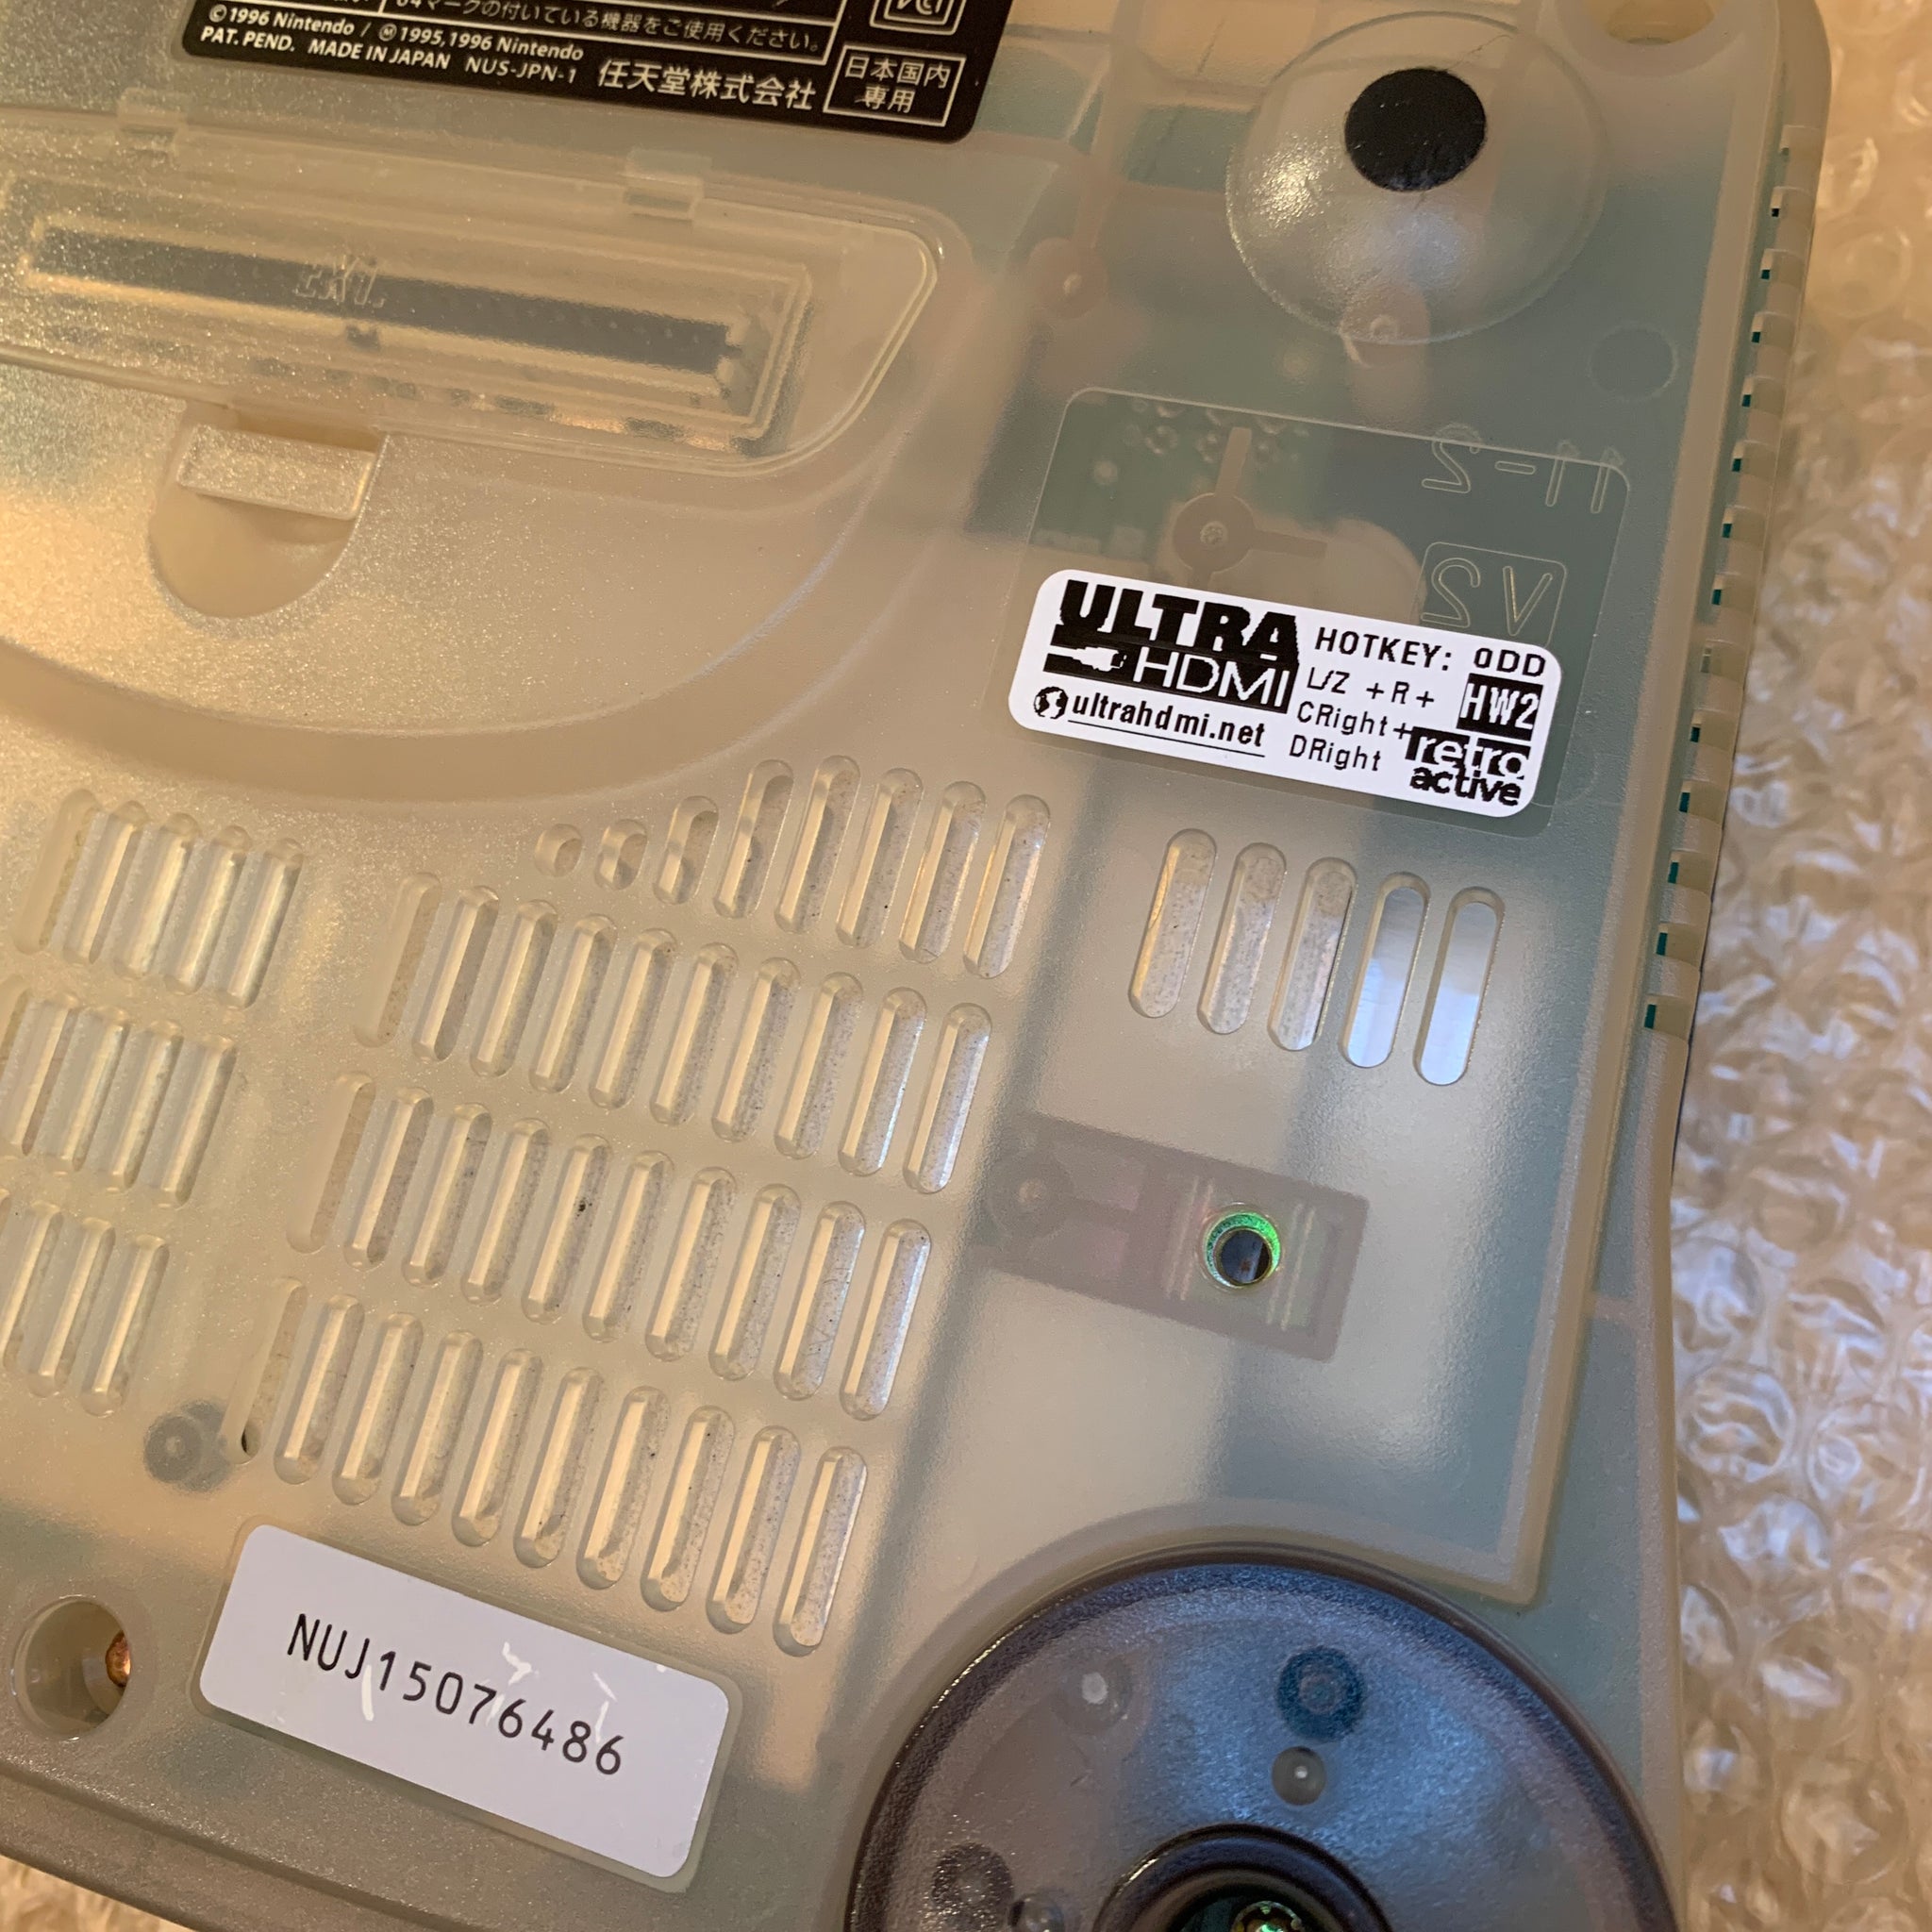 Clear Blue Nintendo 64 set with ULTRA HDMI (HW2 RGB) kit - compat - RetroAsia